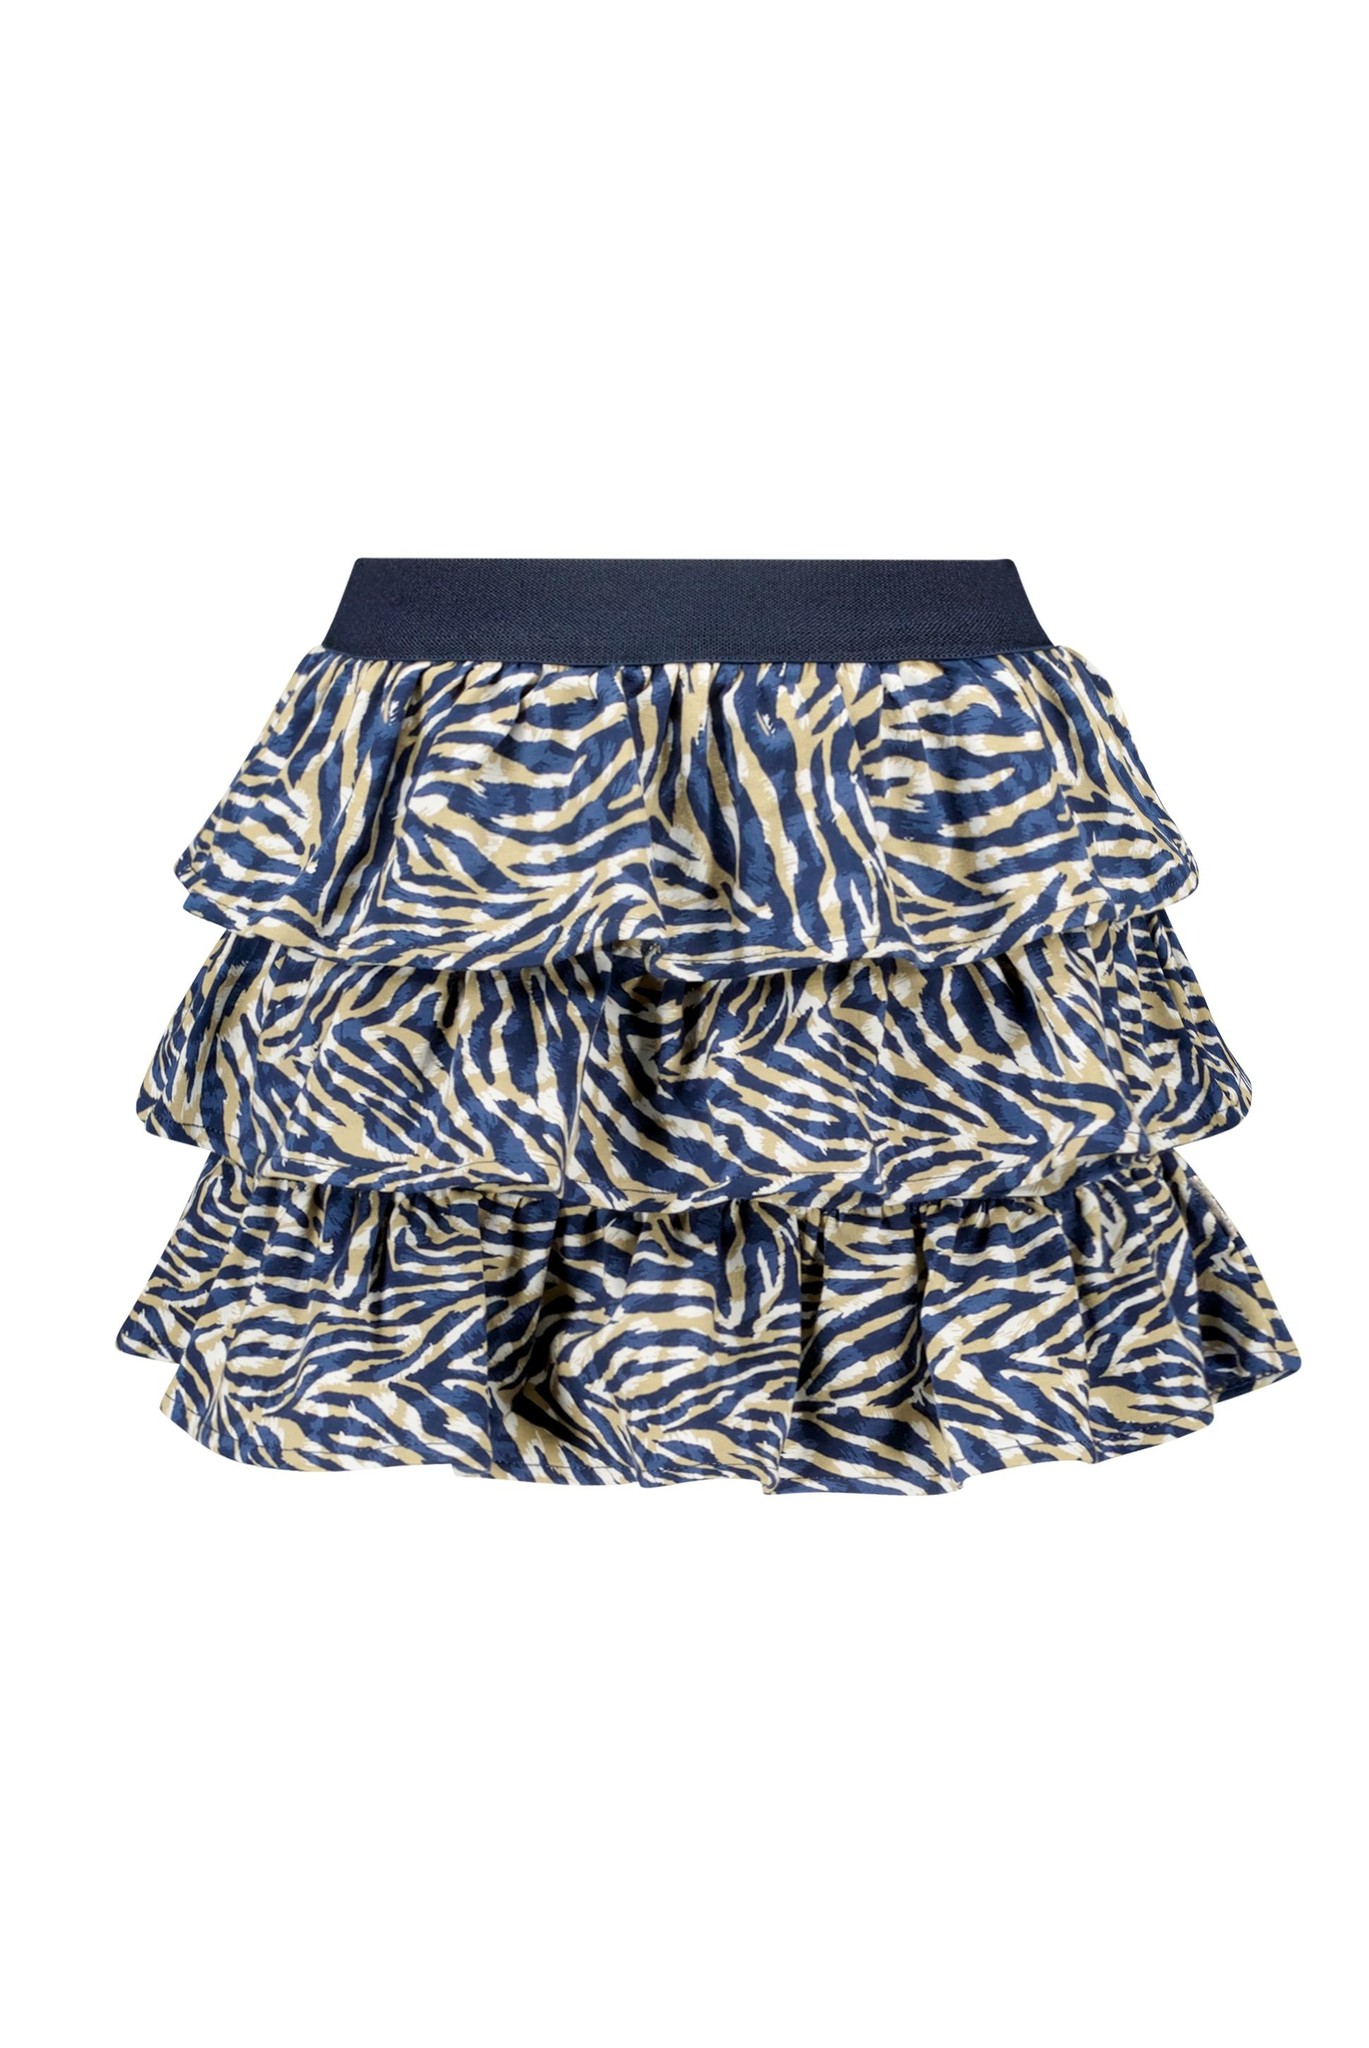 Layered Skirt - Zebra Print